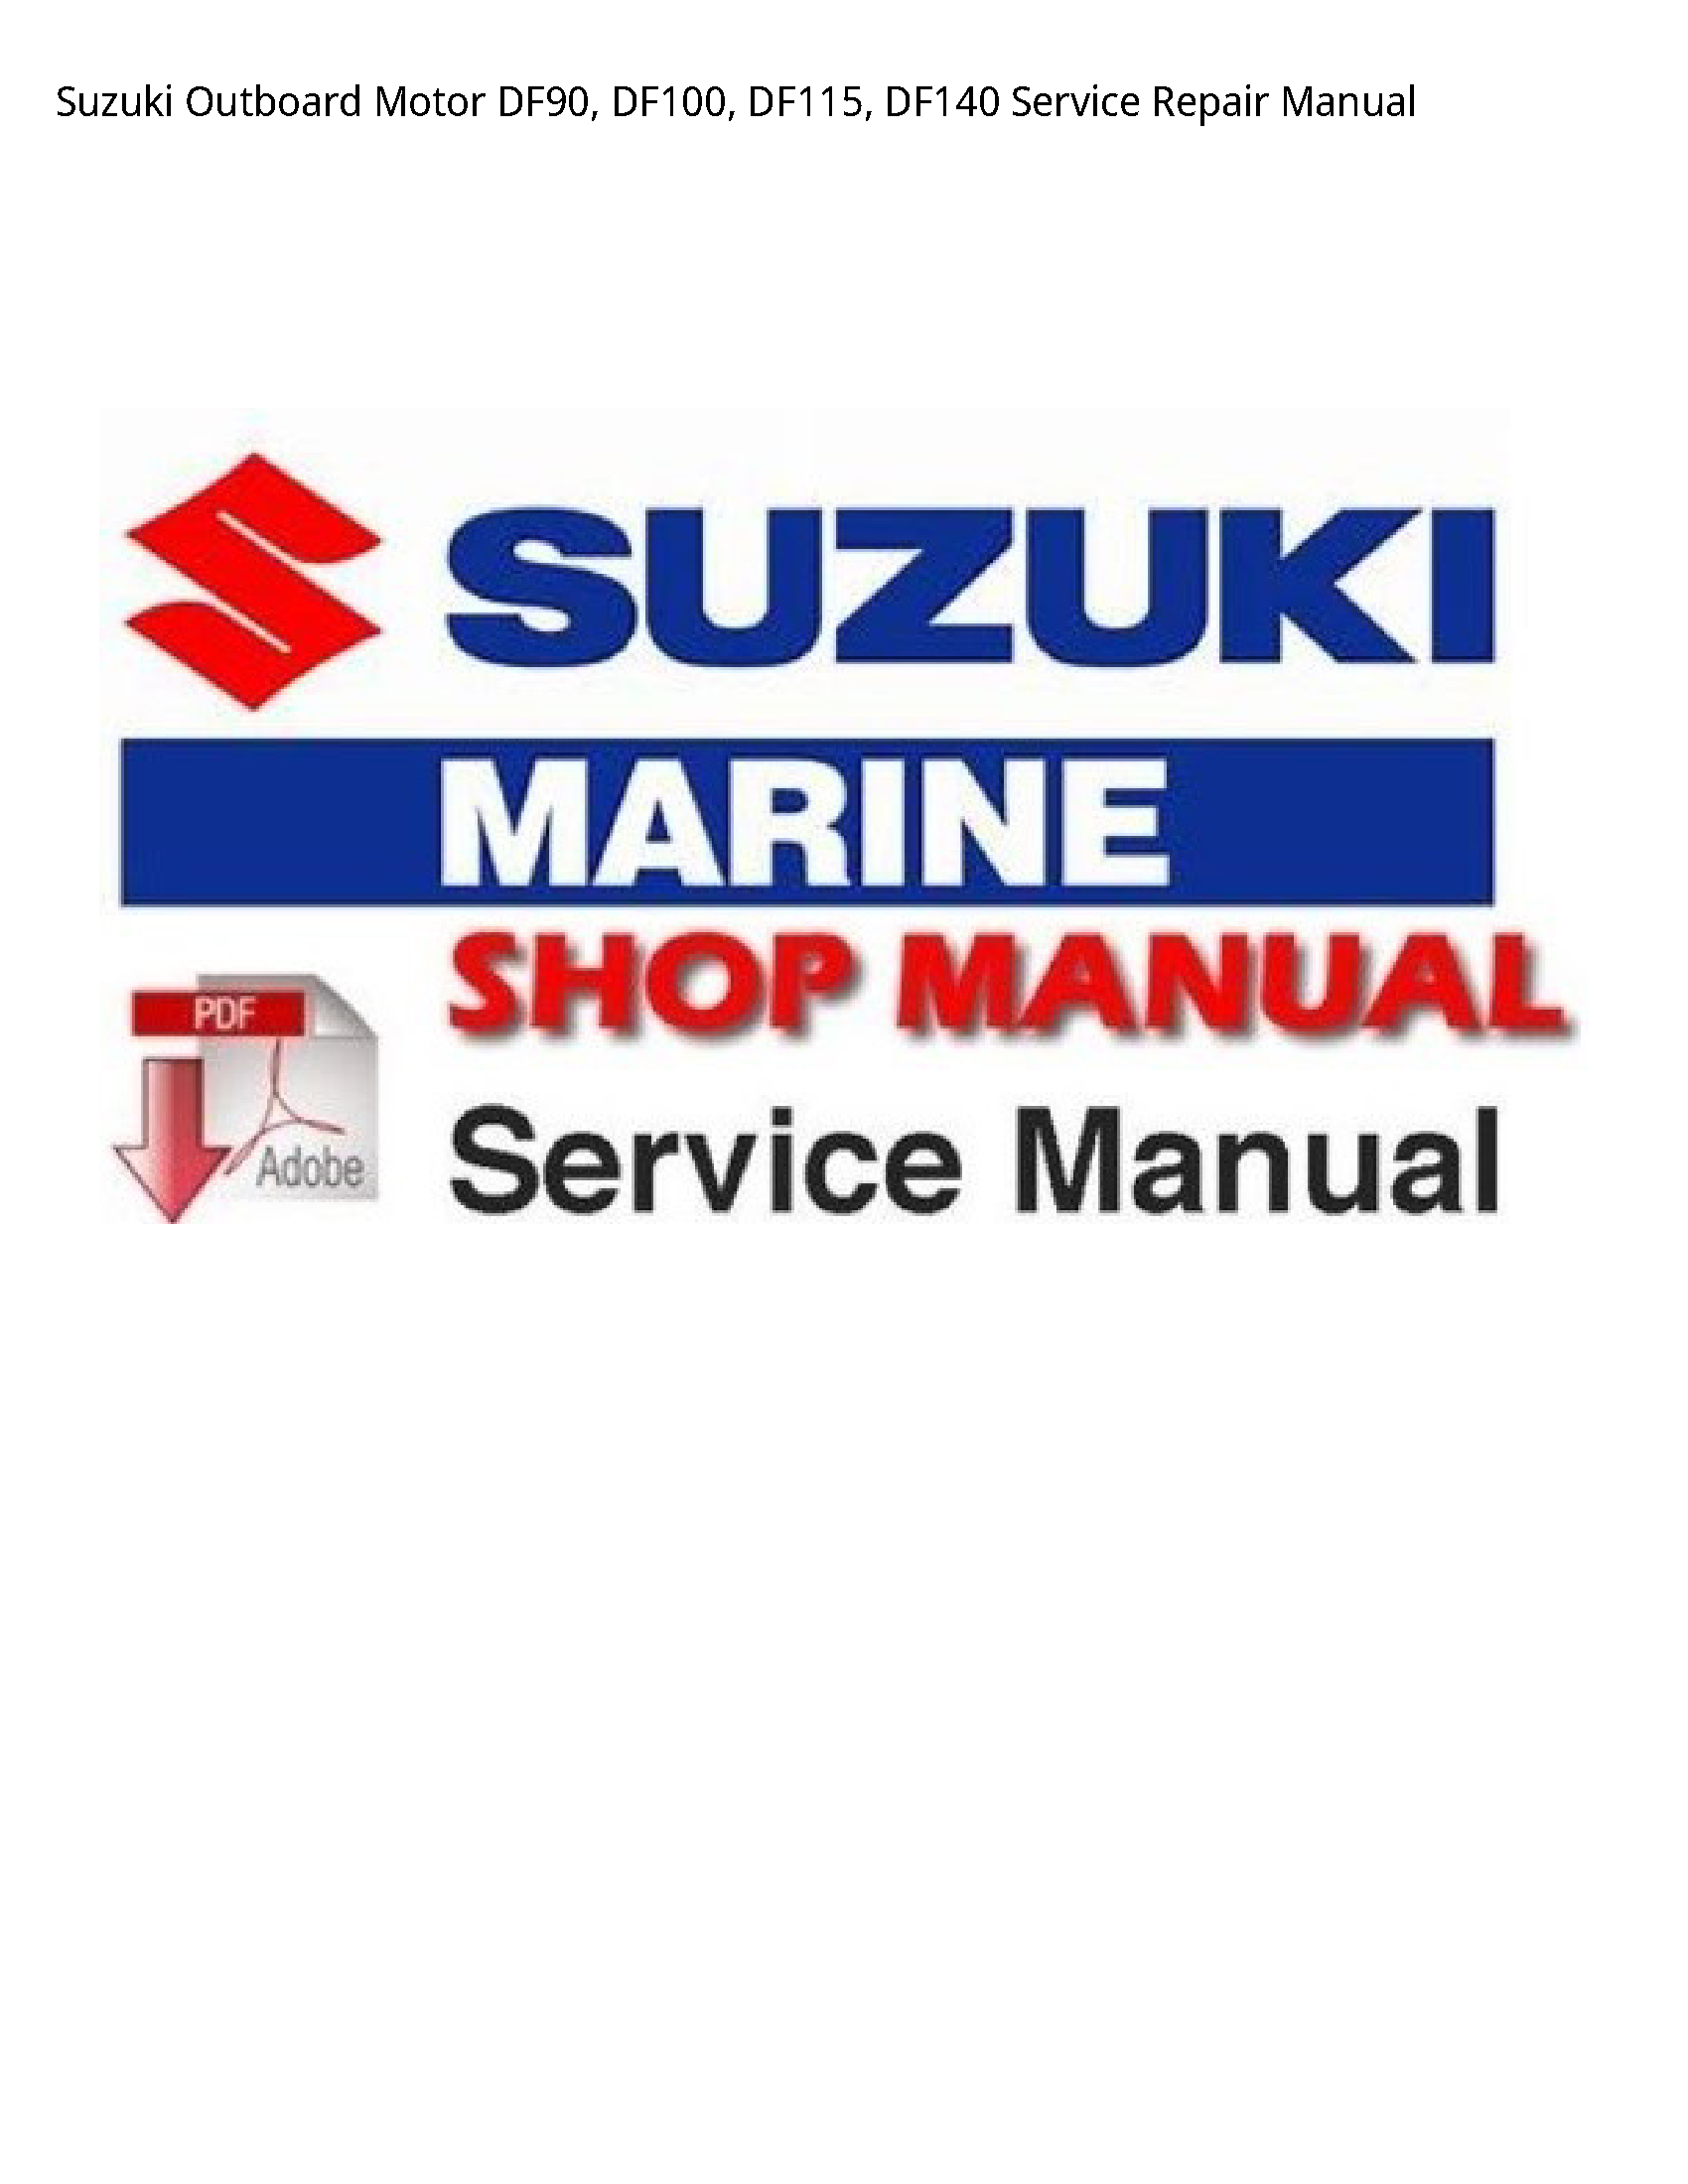 Suzuki DF90 Outboard Motor manual